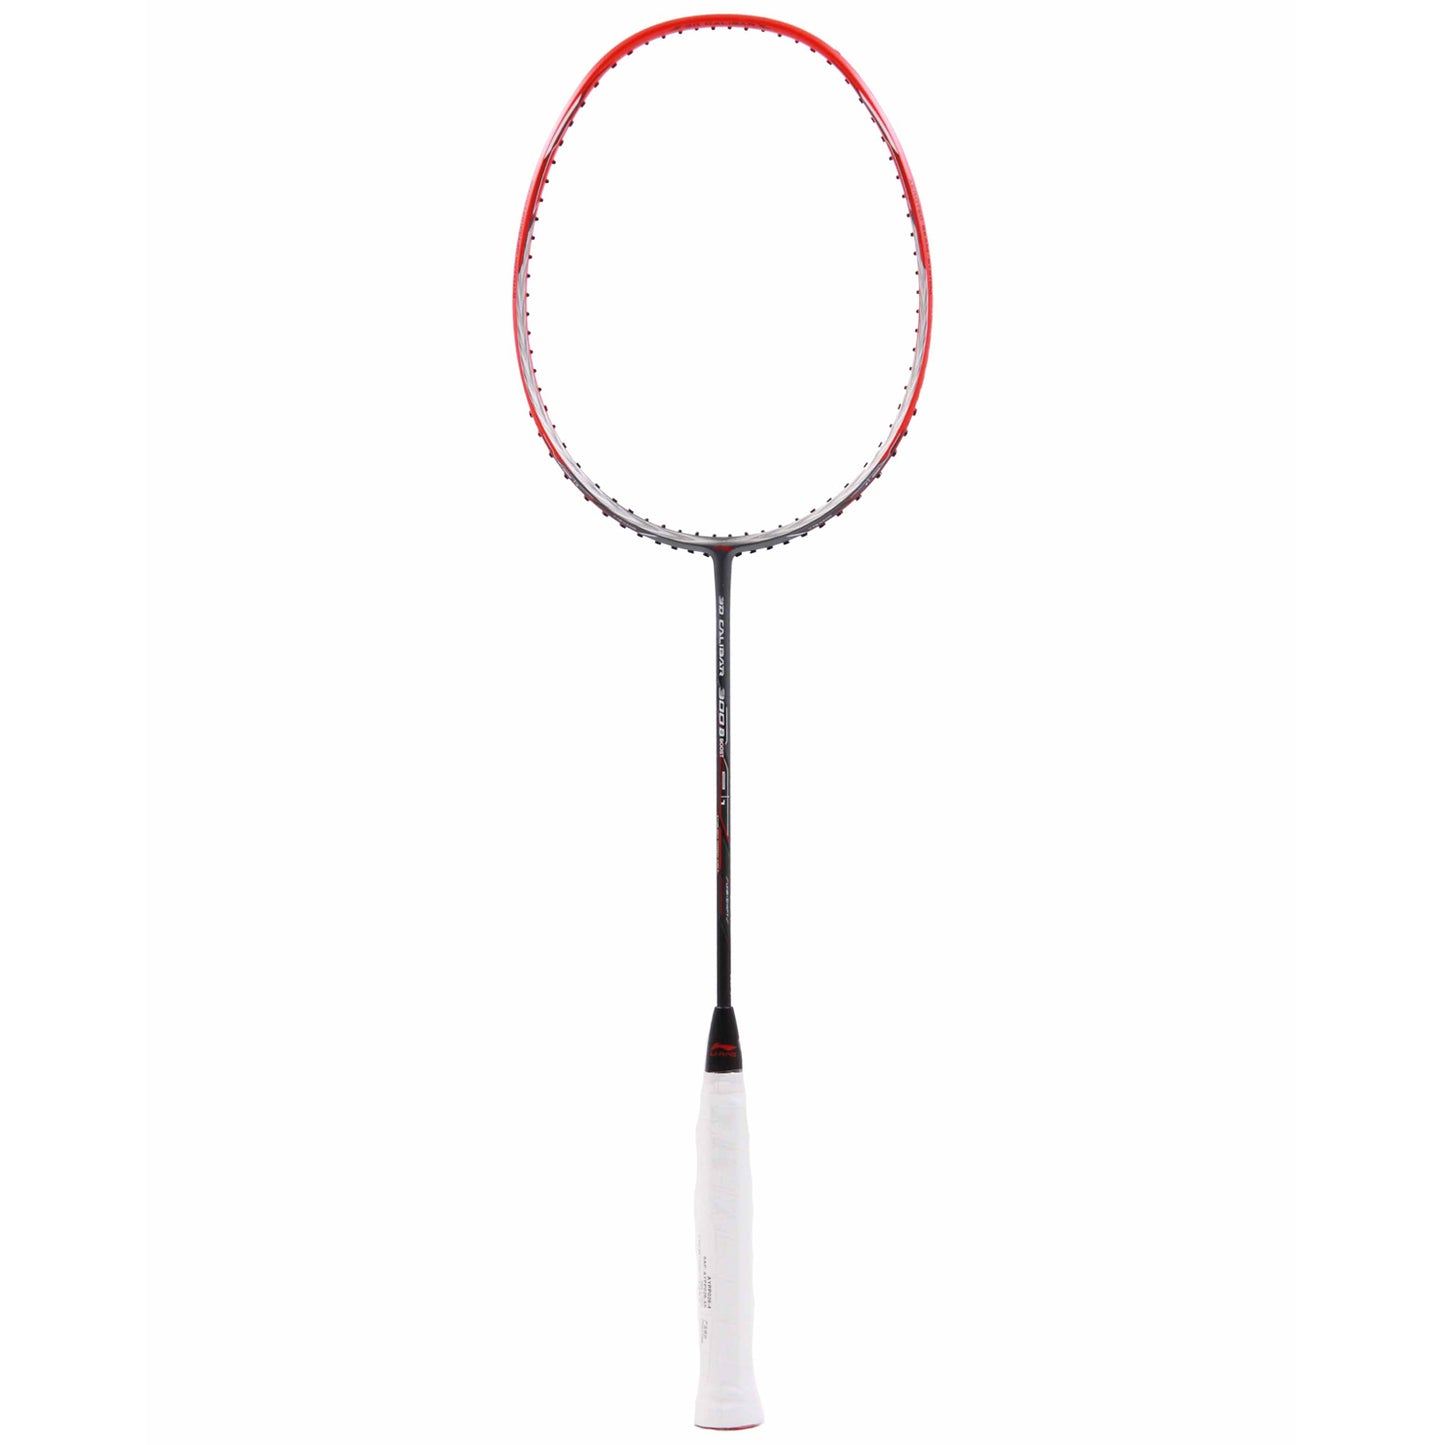 Li-Ning 3D Calibar 300B Badminton Racquet, Dark Grey/Red - Best Price online Prokicksports.com